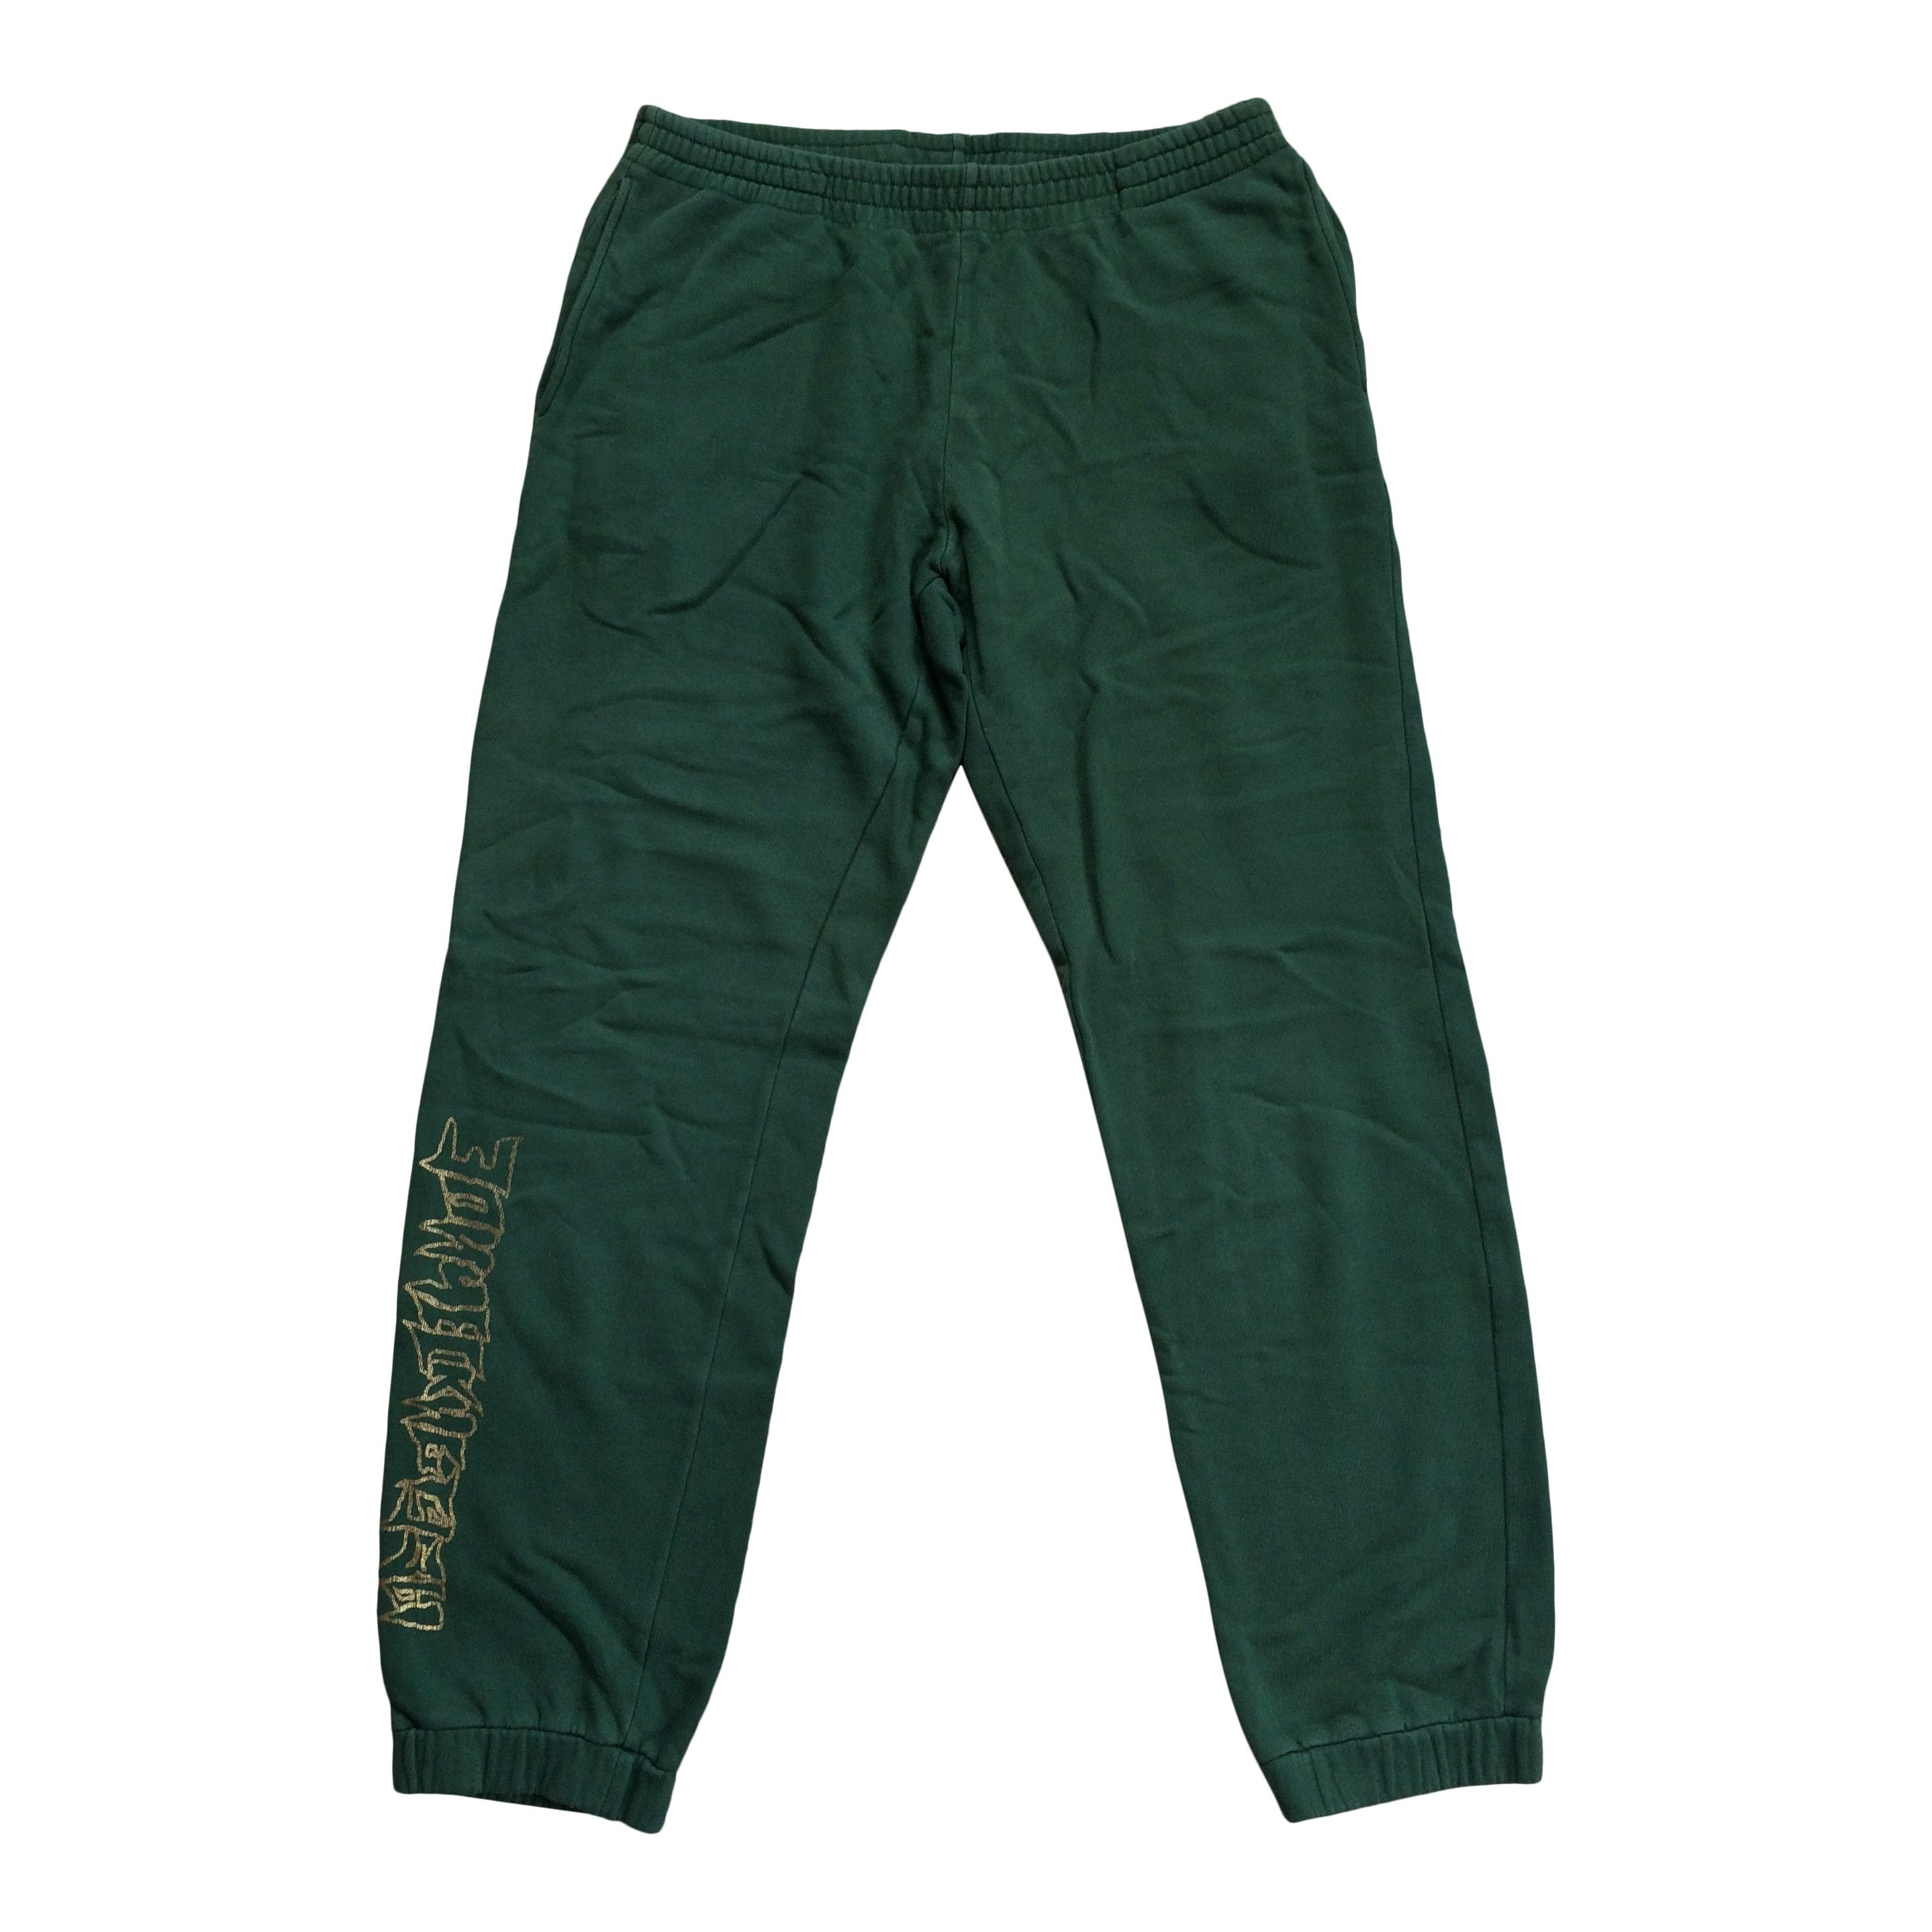 image of F/w 2014 Gosha Rubchinskiy "epic Aces" Sweatpants in Green, Men's (Size 30)